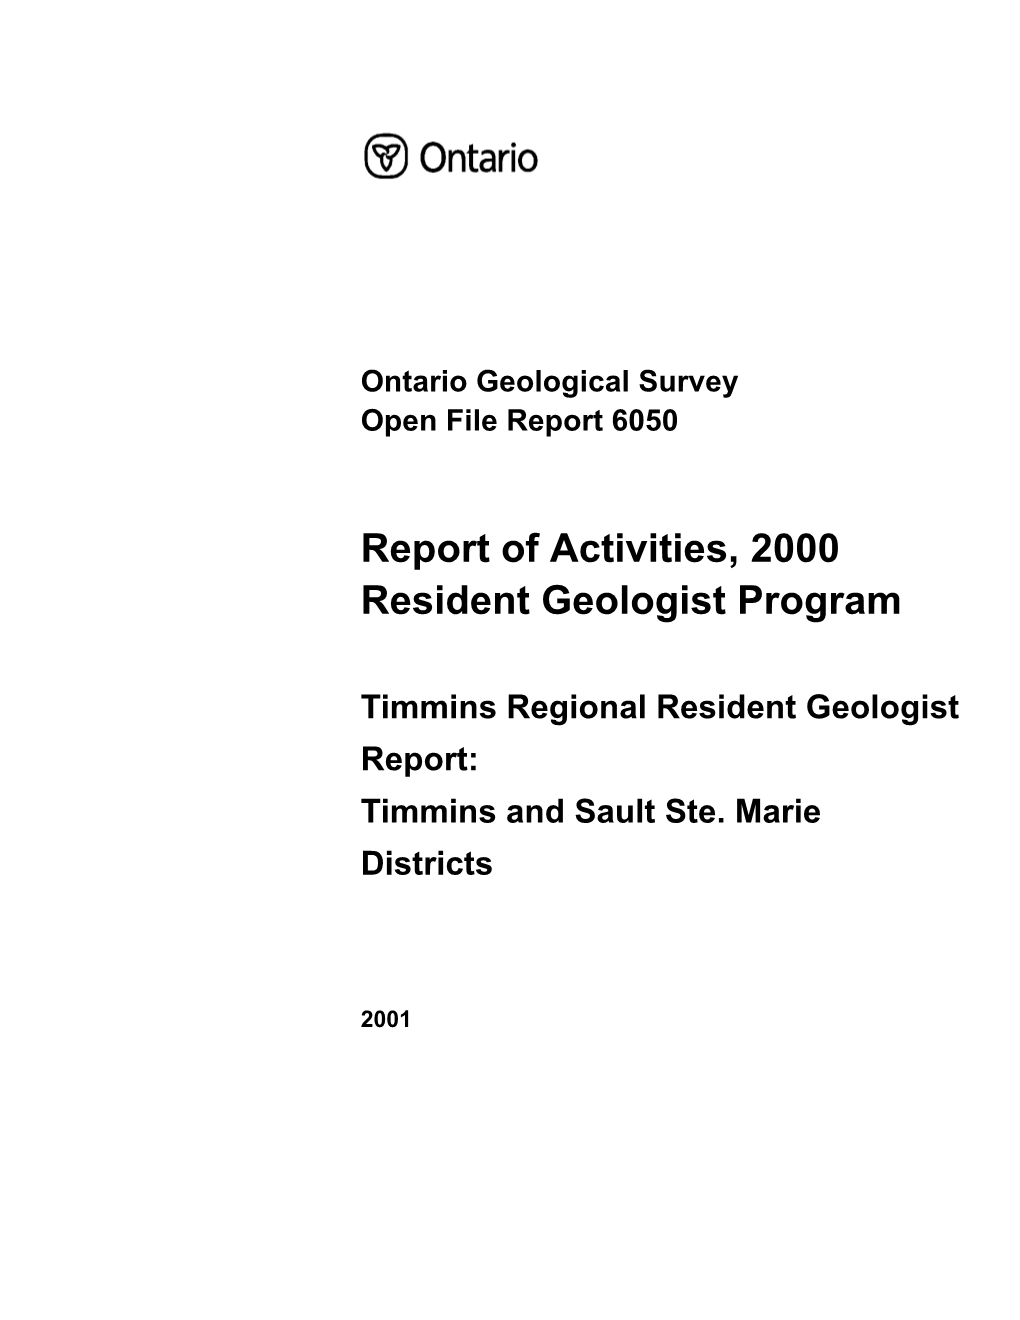 Report, Activities, 2000, Timmins, Sault Ste Marie